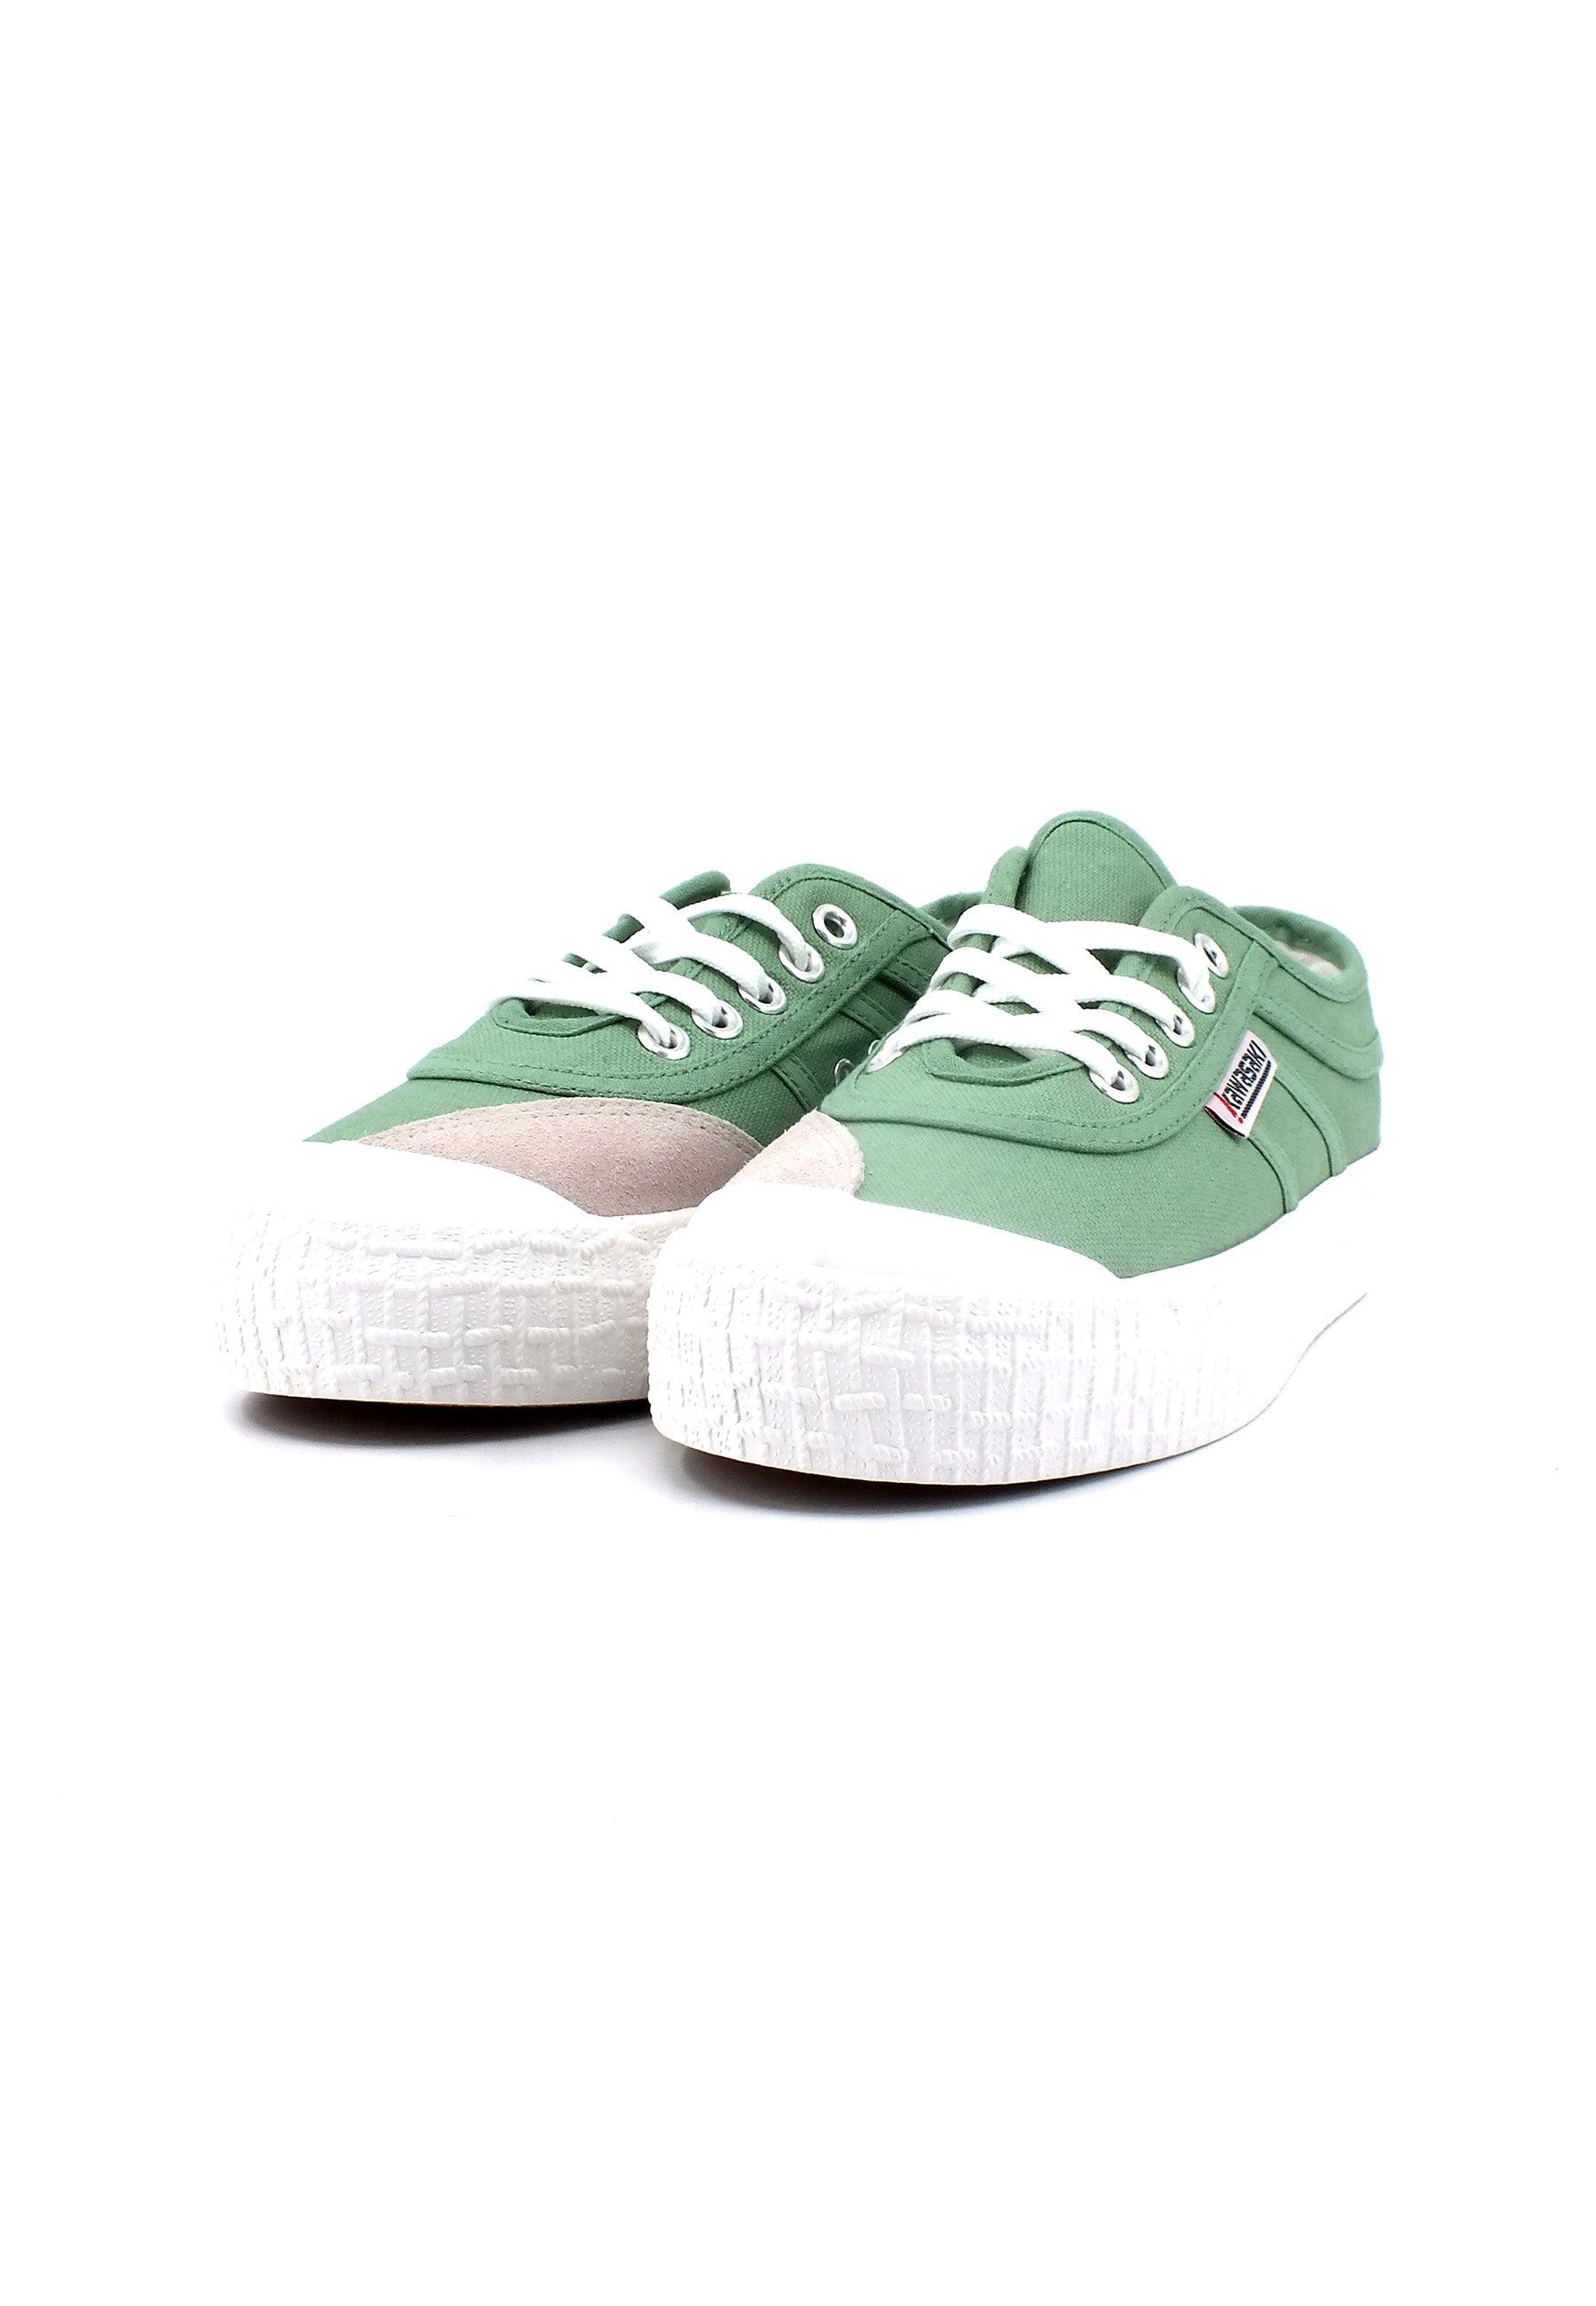 KAWASAKI Original 3.0 Sneaker Donna Agave Green K232427 - Sandrini Calzature e Abbigliamento